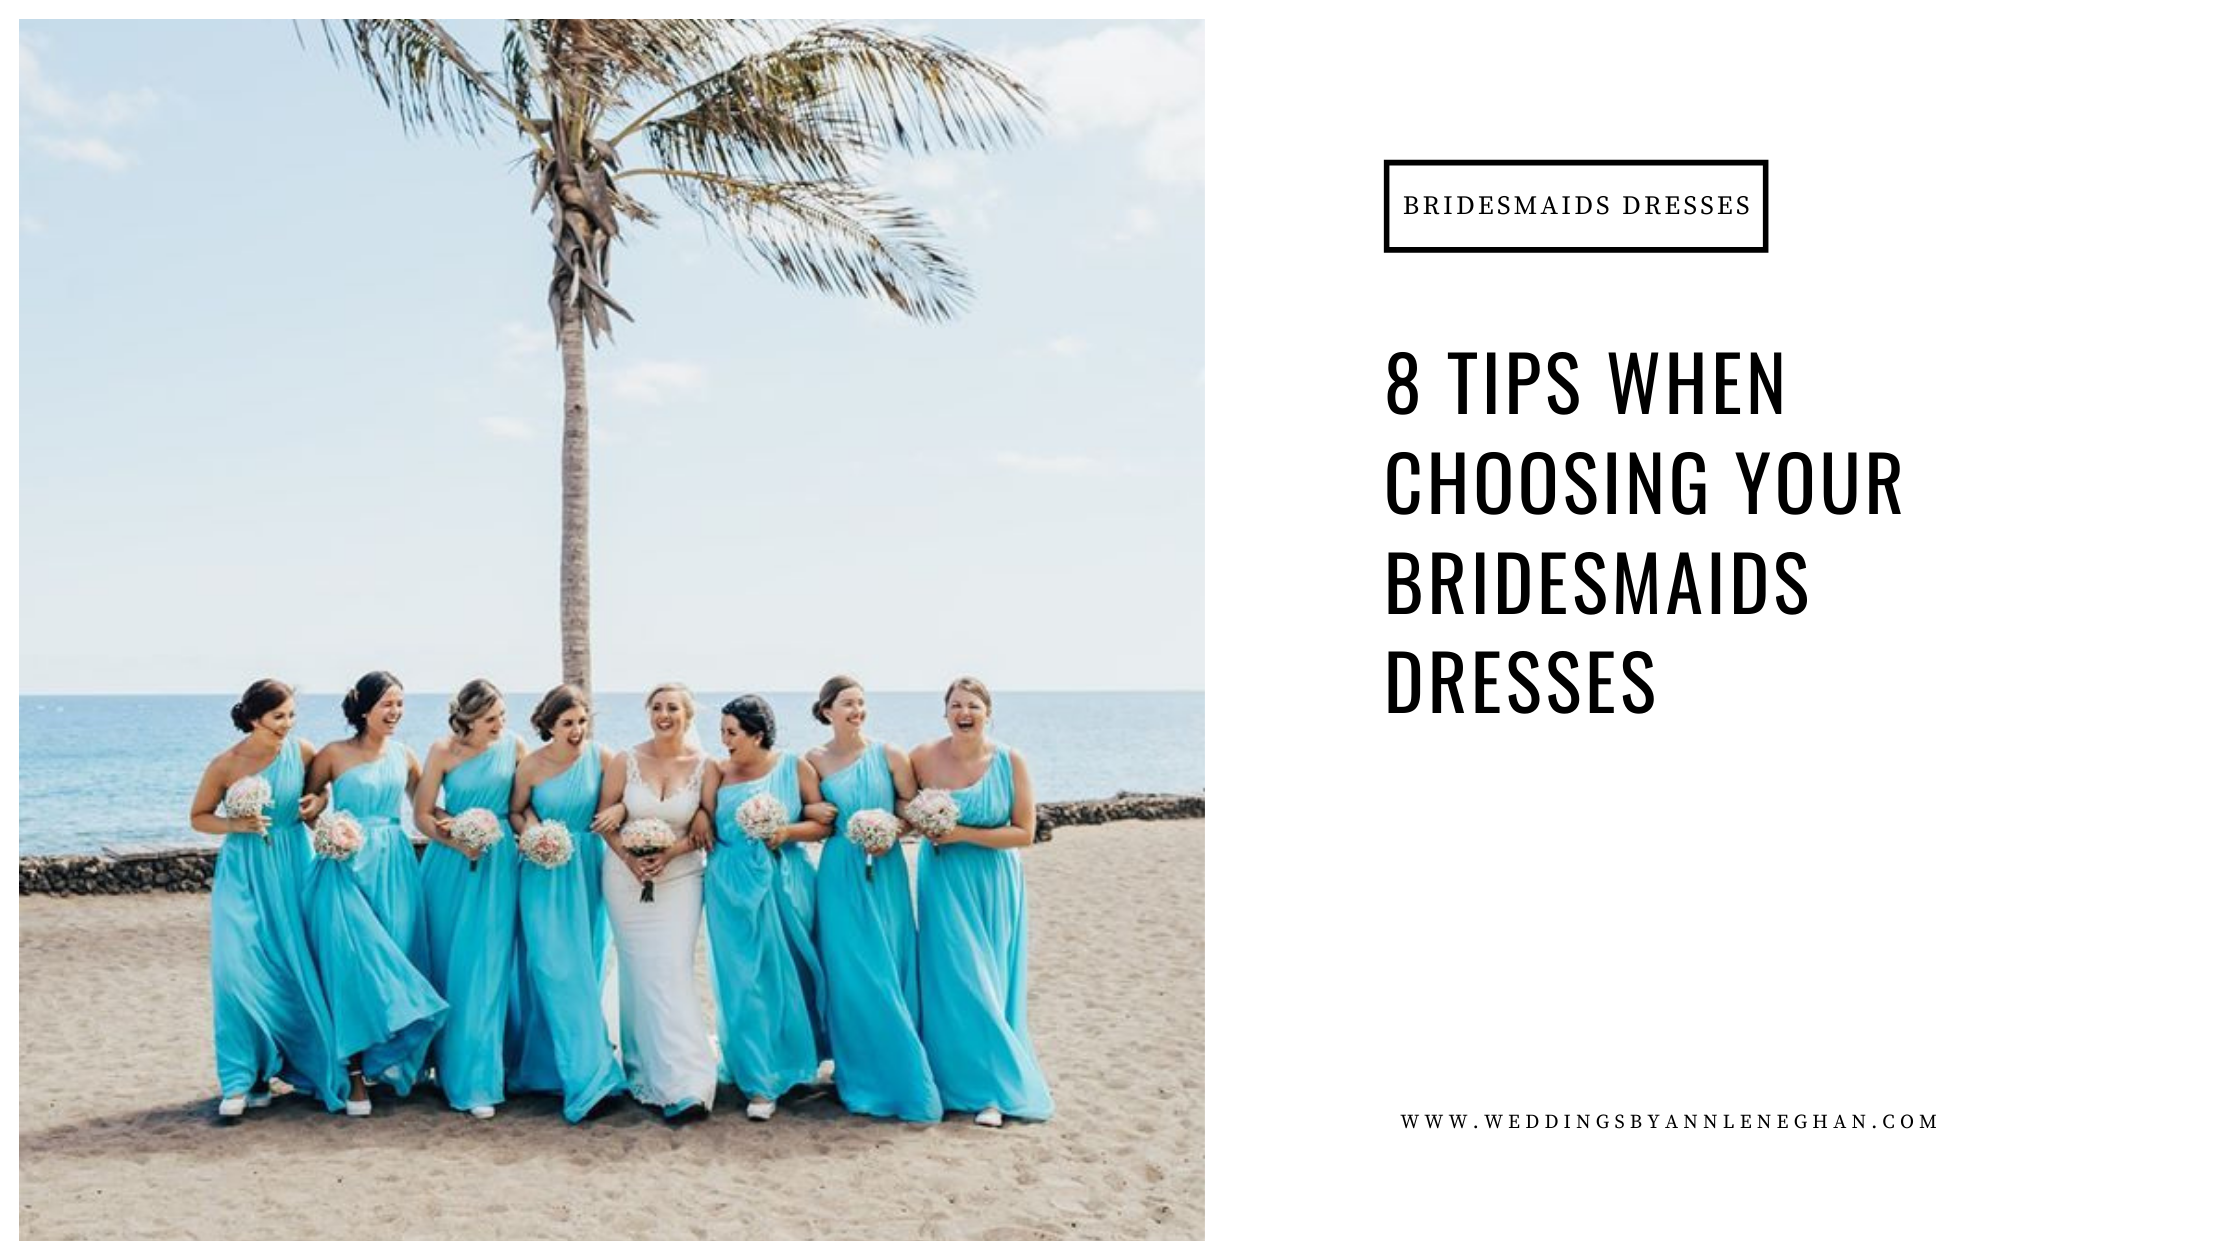 8 tips on choosing bridesmaids dresses!